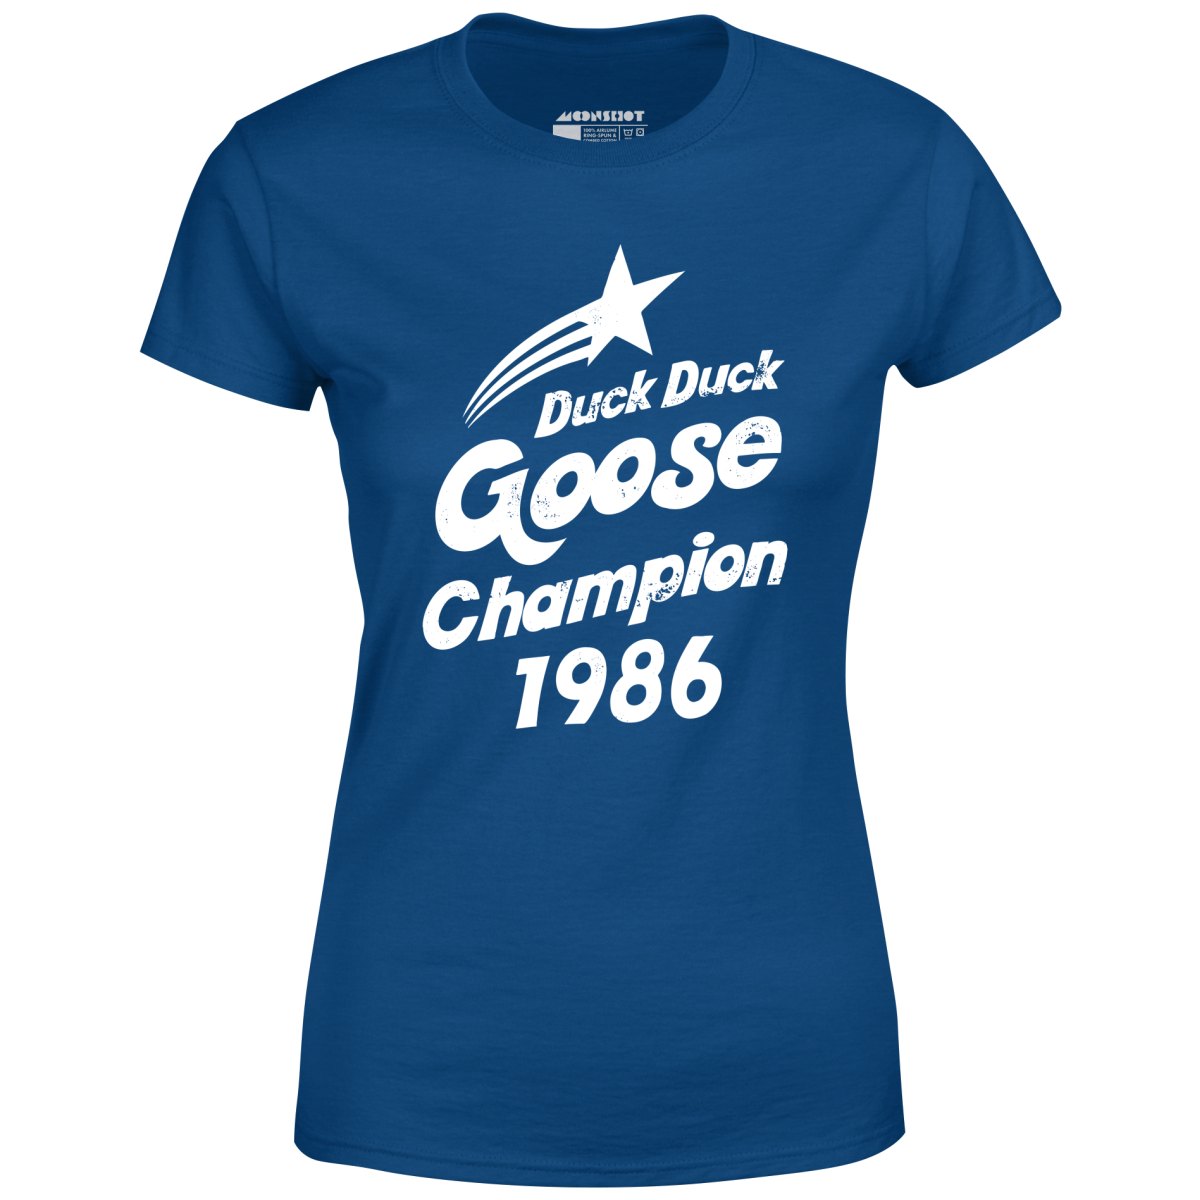 Duck Duck Goose Champion 1986 - Women's T-Shirt